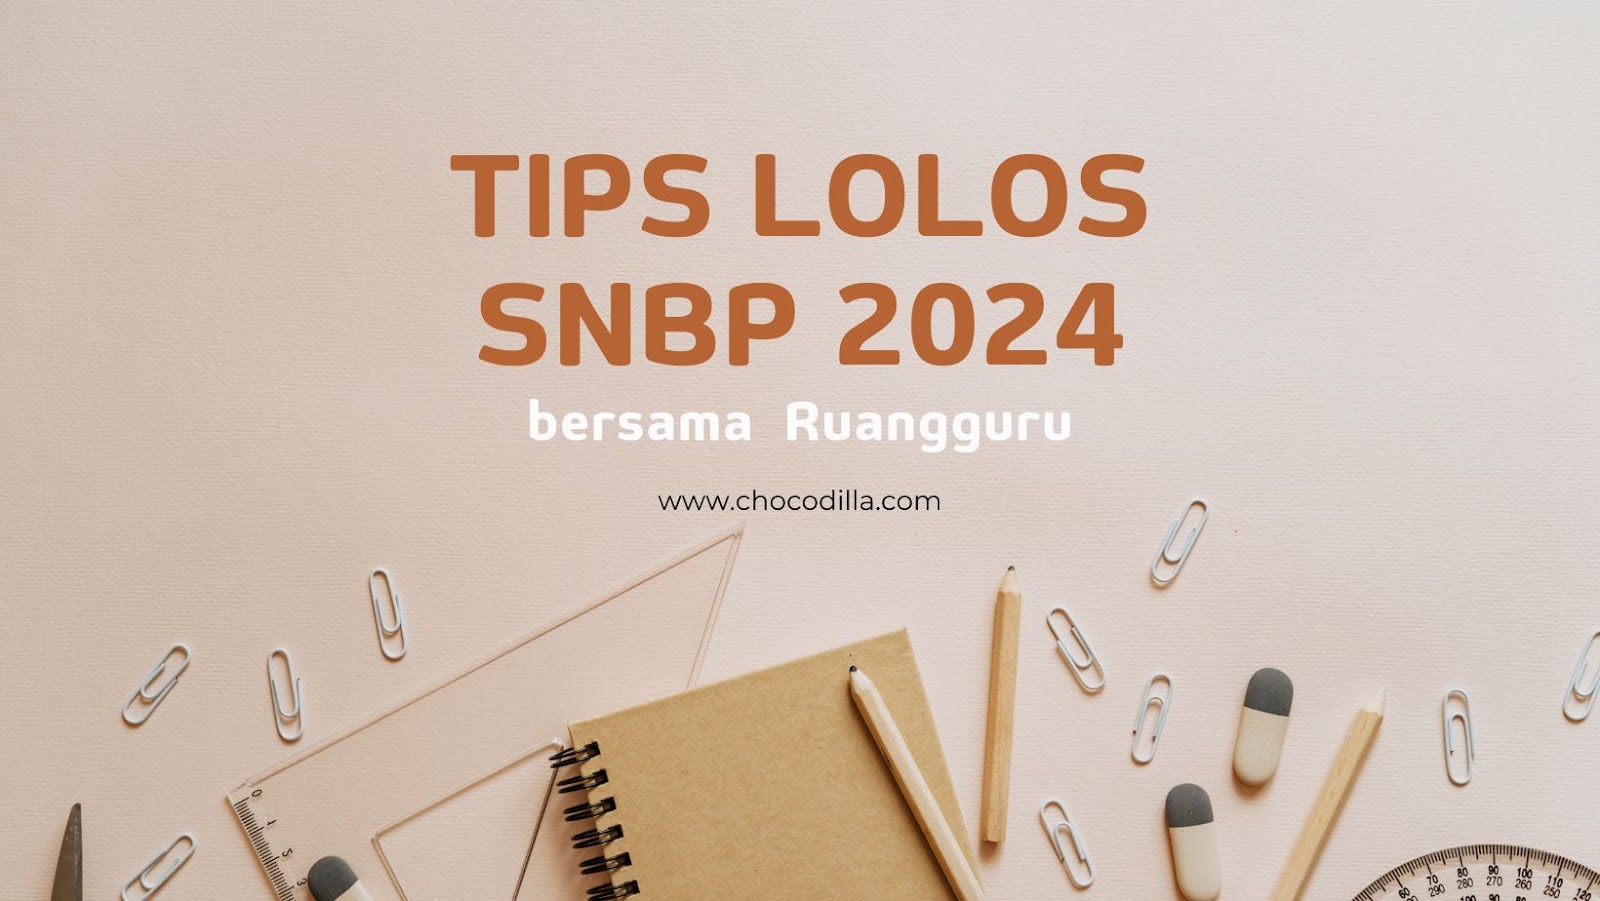 Tips Lolos SNBP 2024 dengan Belajar di Ruangguru